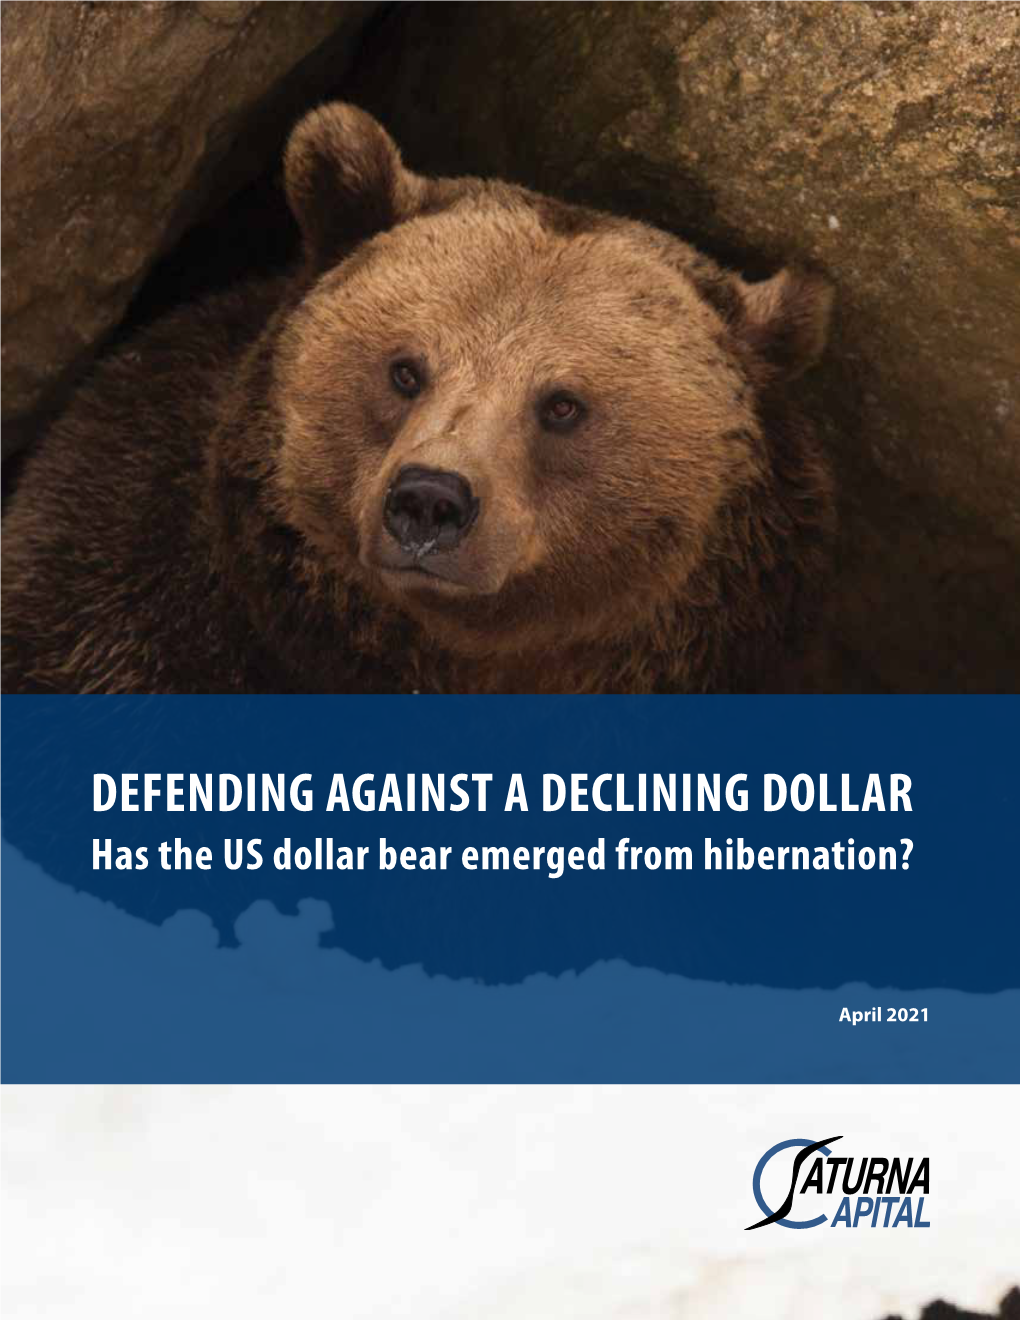 DEFENDING AGAINST a DECLINING DOLLAR Has the US Dollar Bear Emerged from Hibernation?